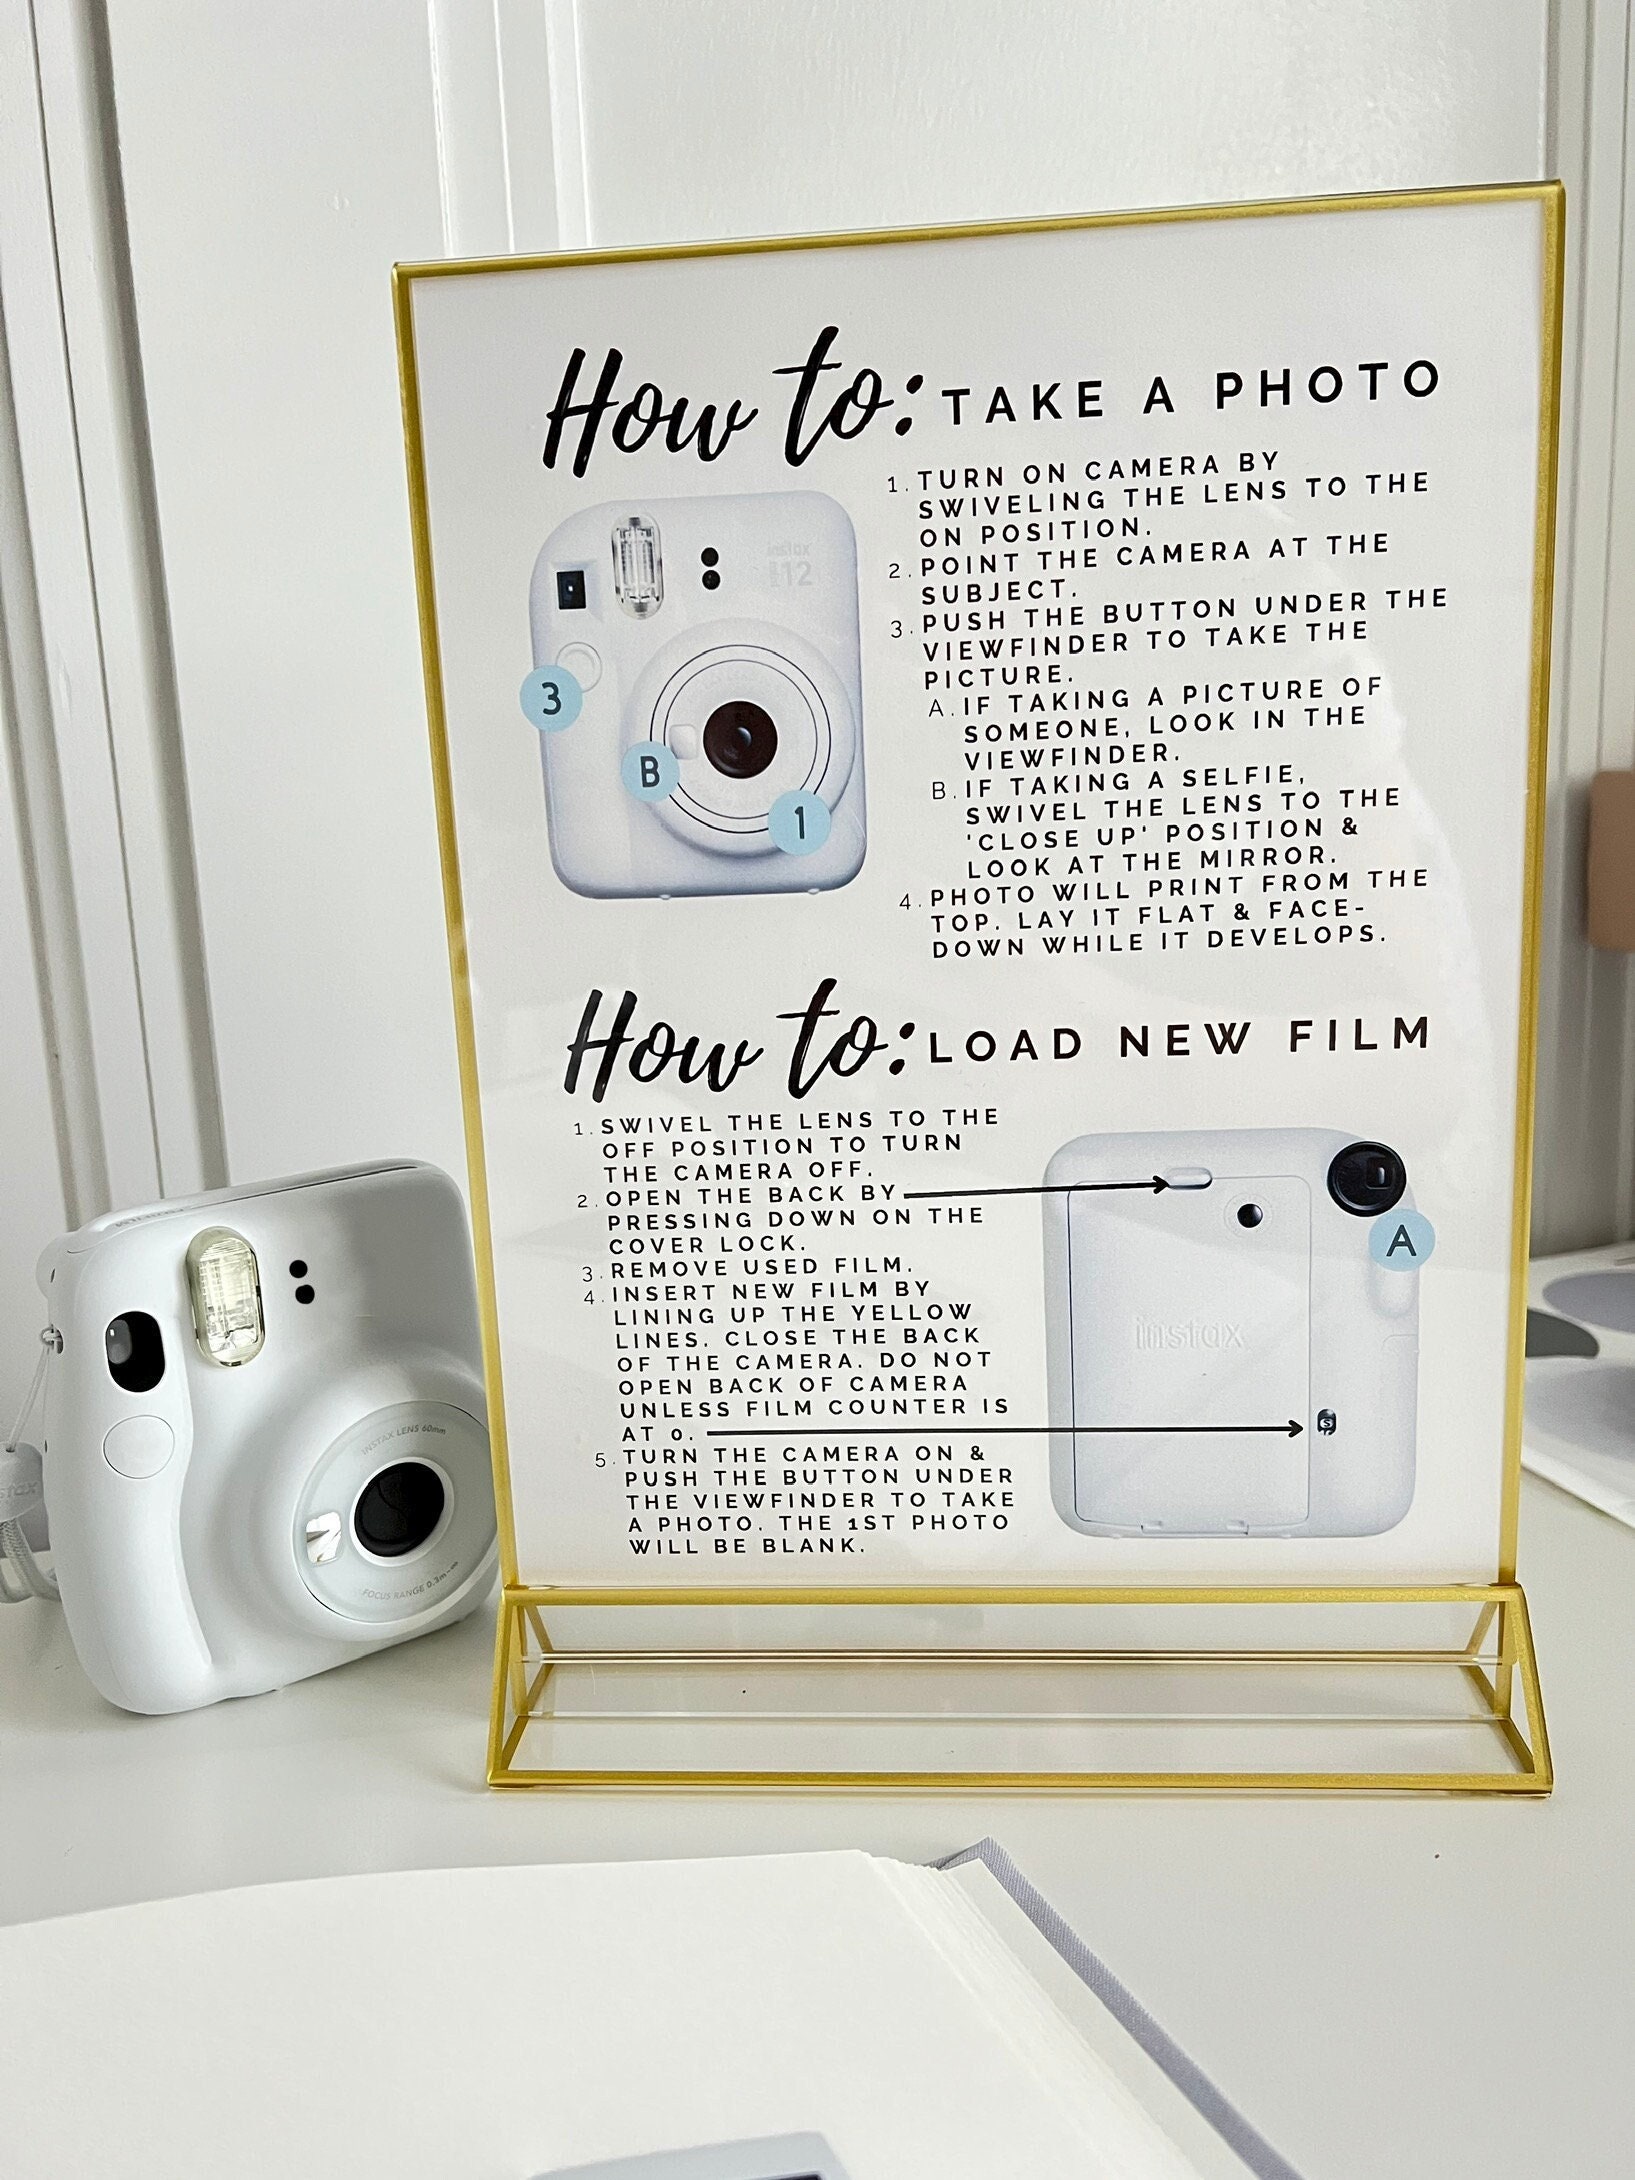 Polaroid launches home 3D printer range